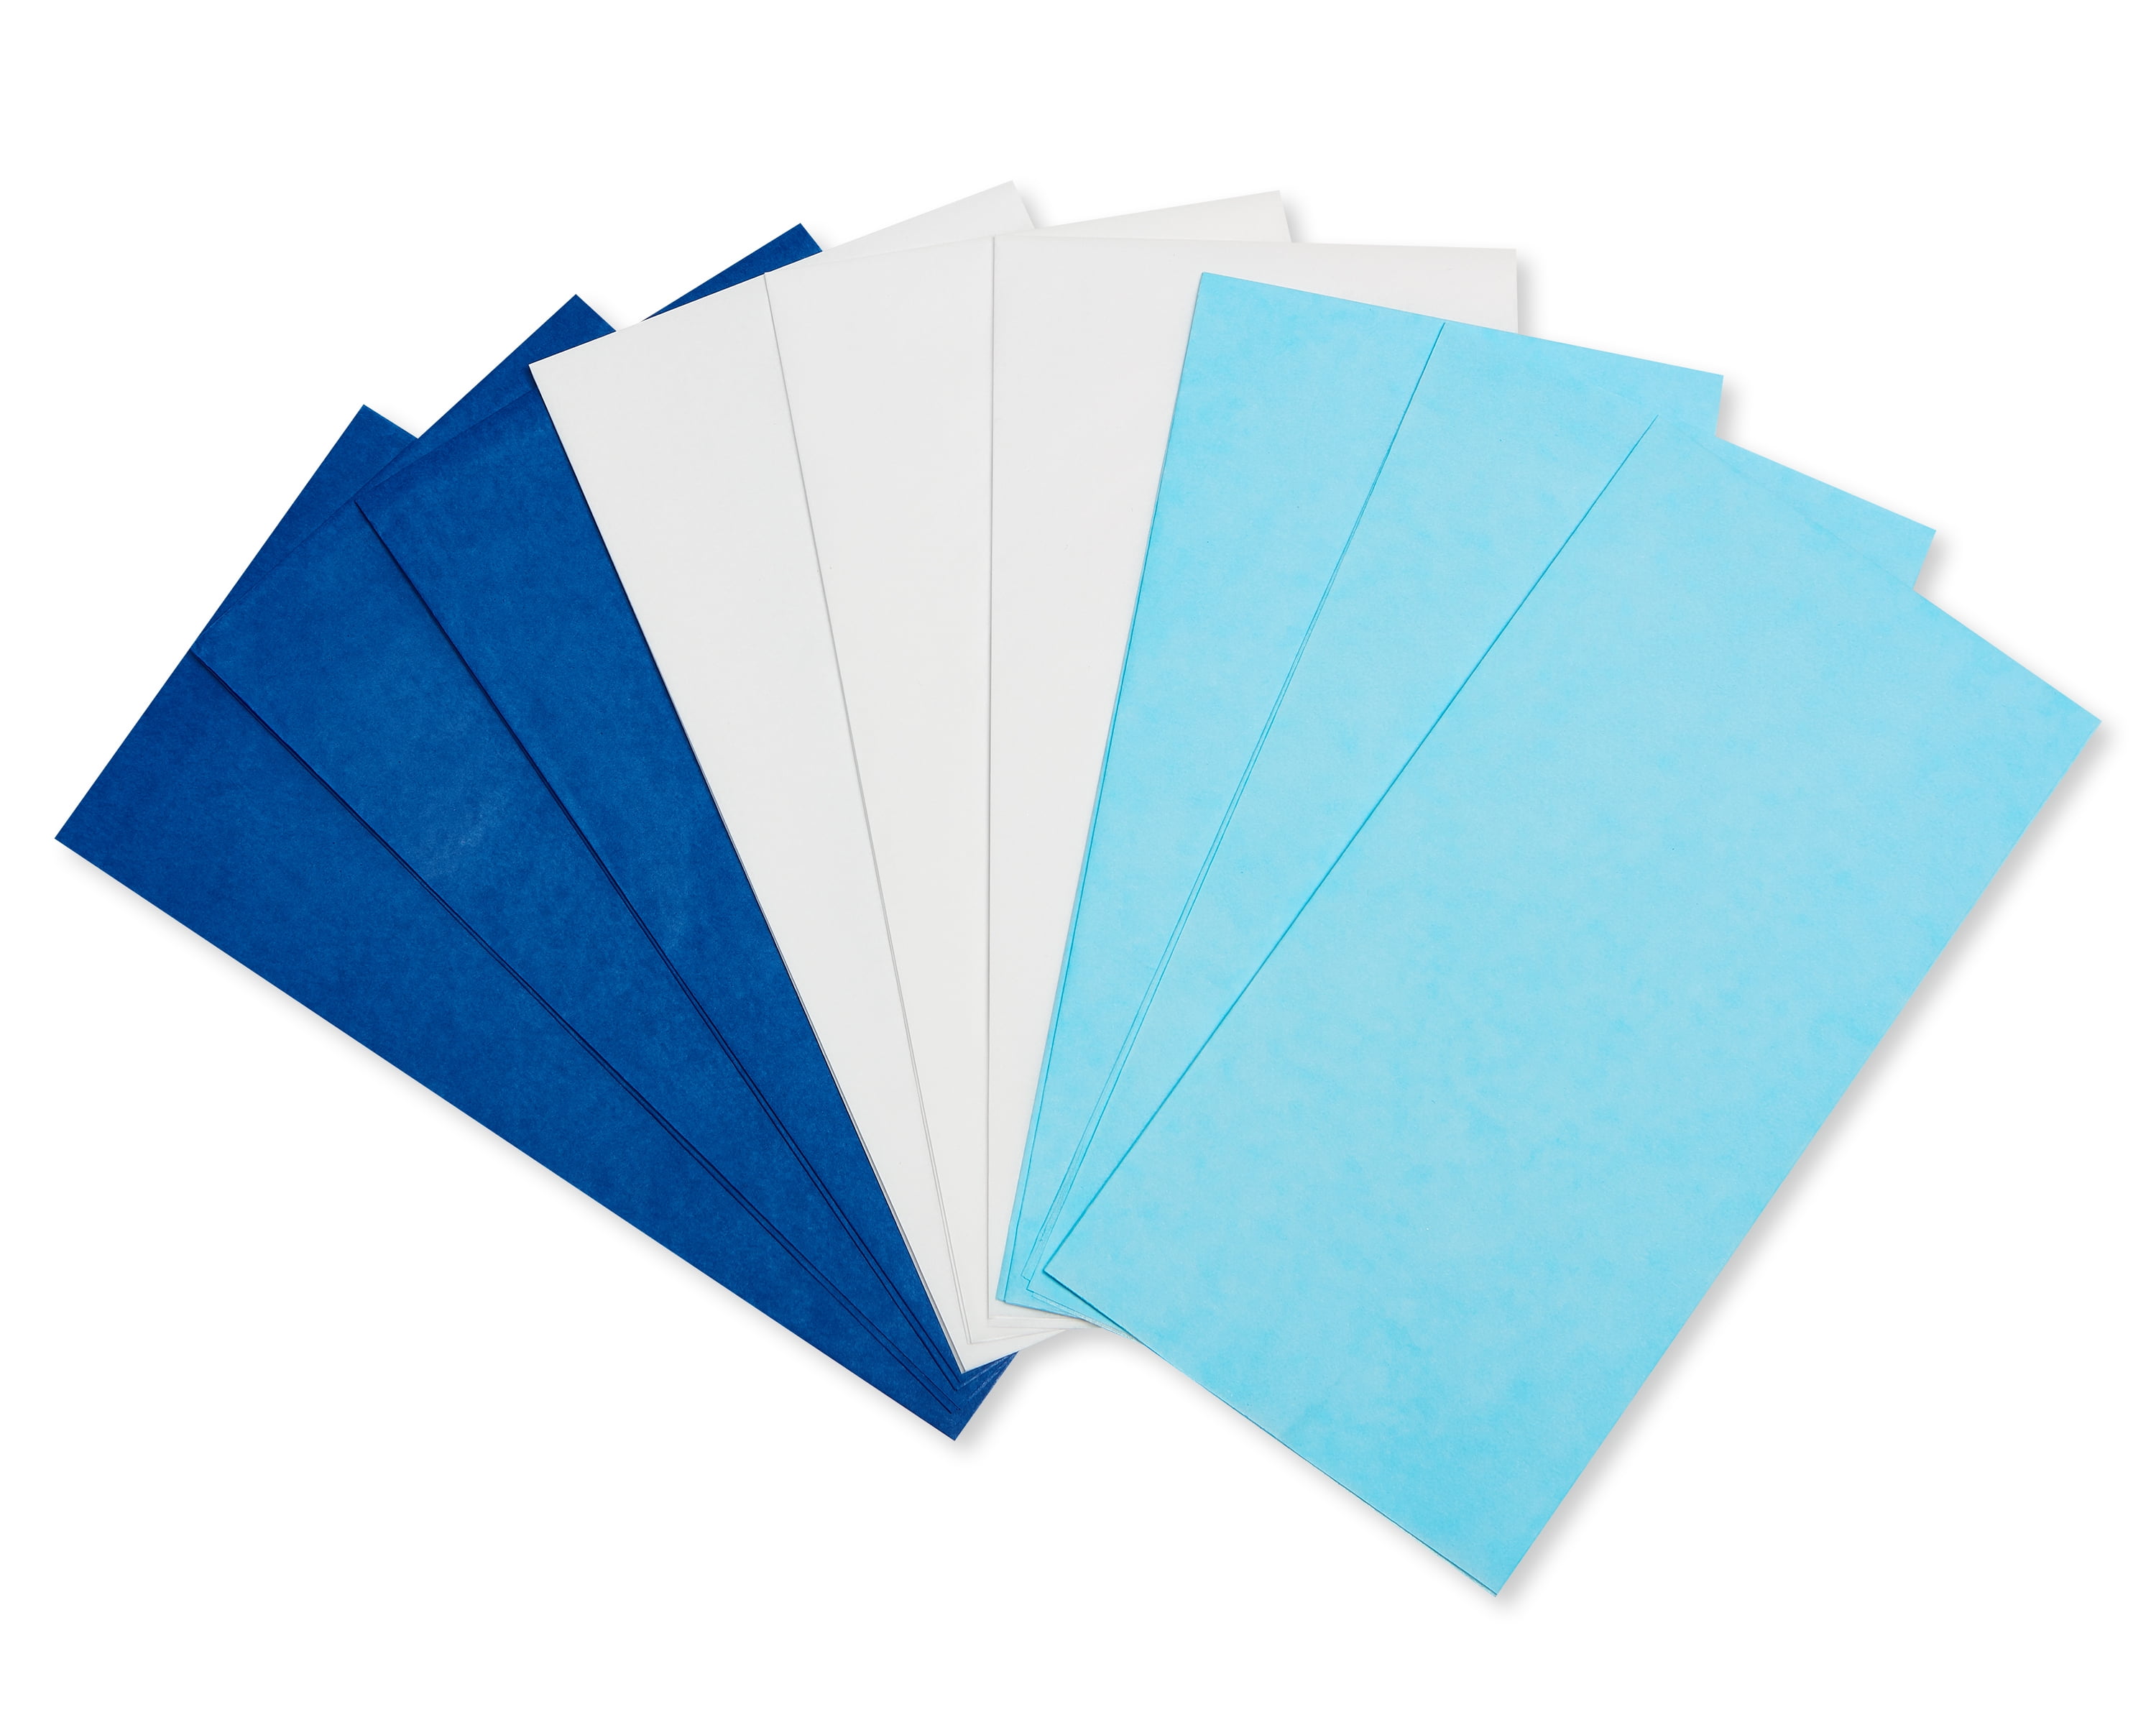 Metallic Silver Tissue Paper Sheets